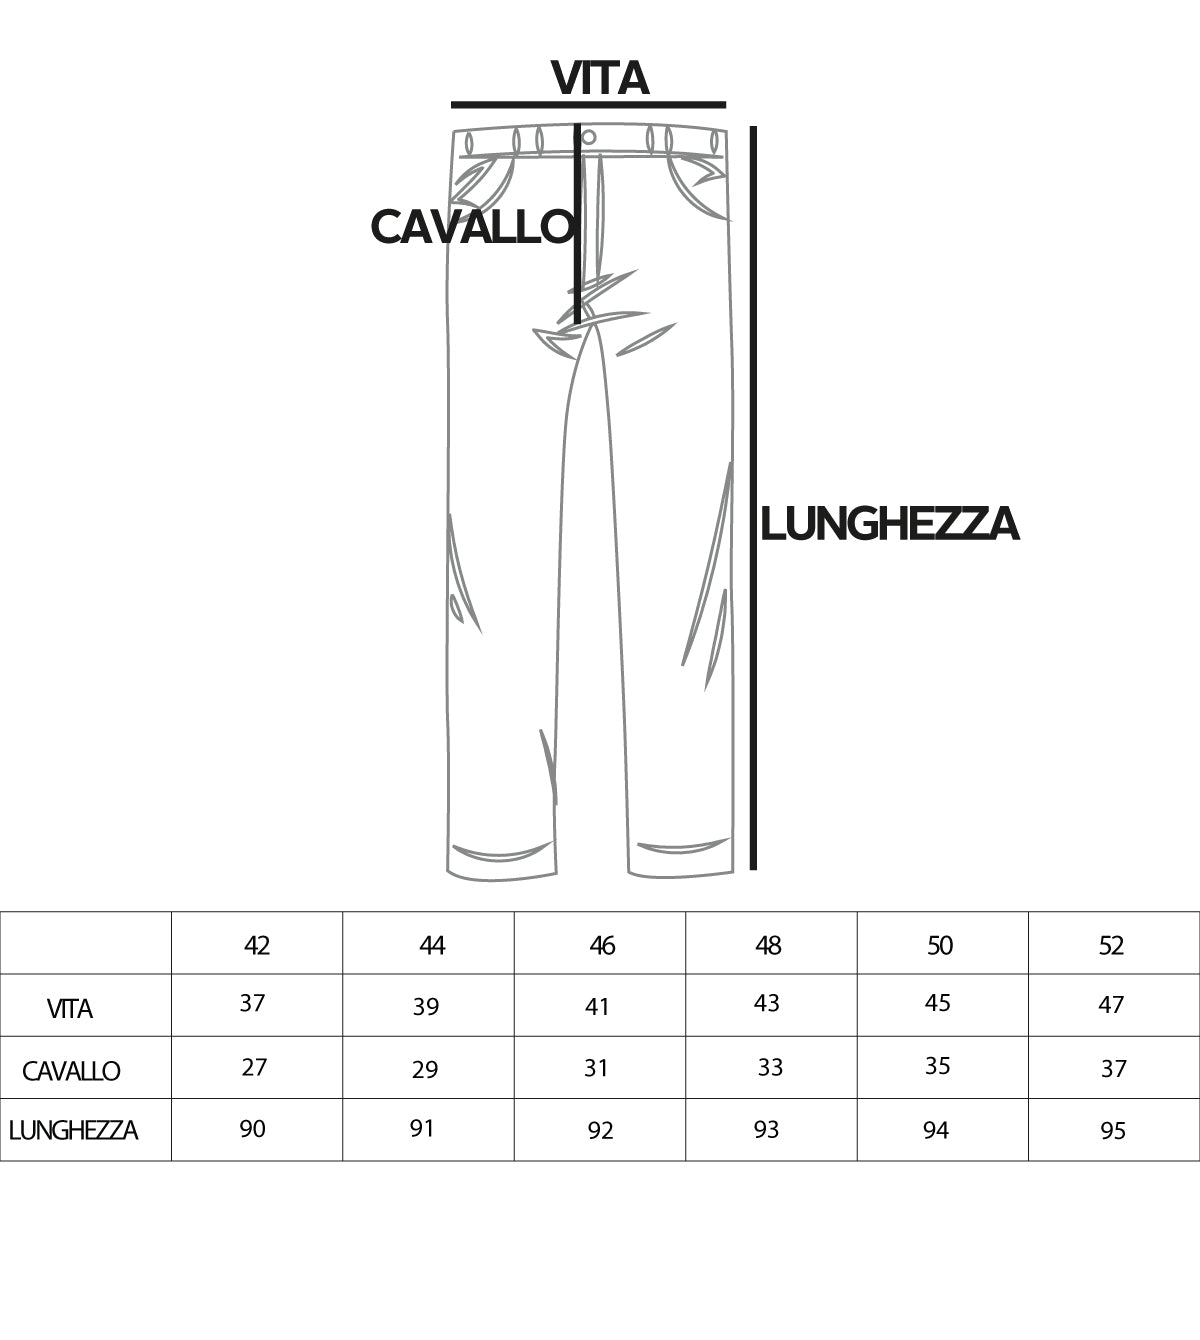 Pantaloni Jeans Uomo Loose Fit Verde Con Rotture Cinque Tasche Casual GIOSAL-P4086A